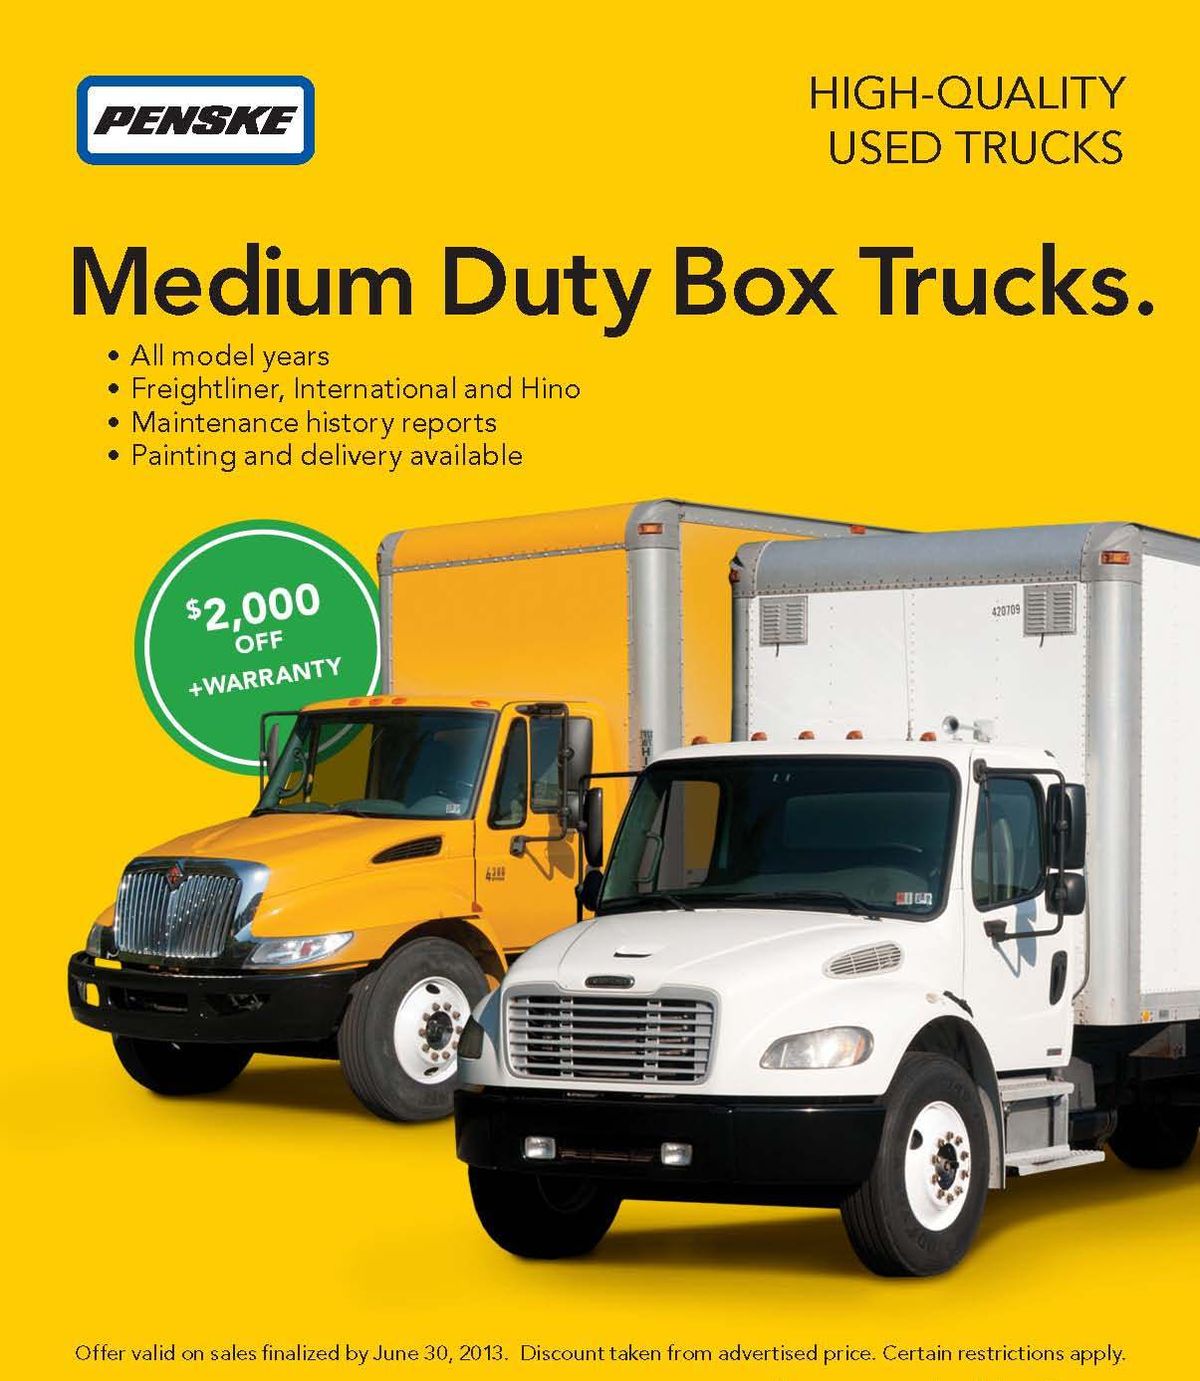 Penske Offering $2,000 Discount on Medium-Duty Box Truck Purchases